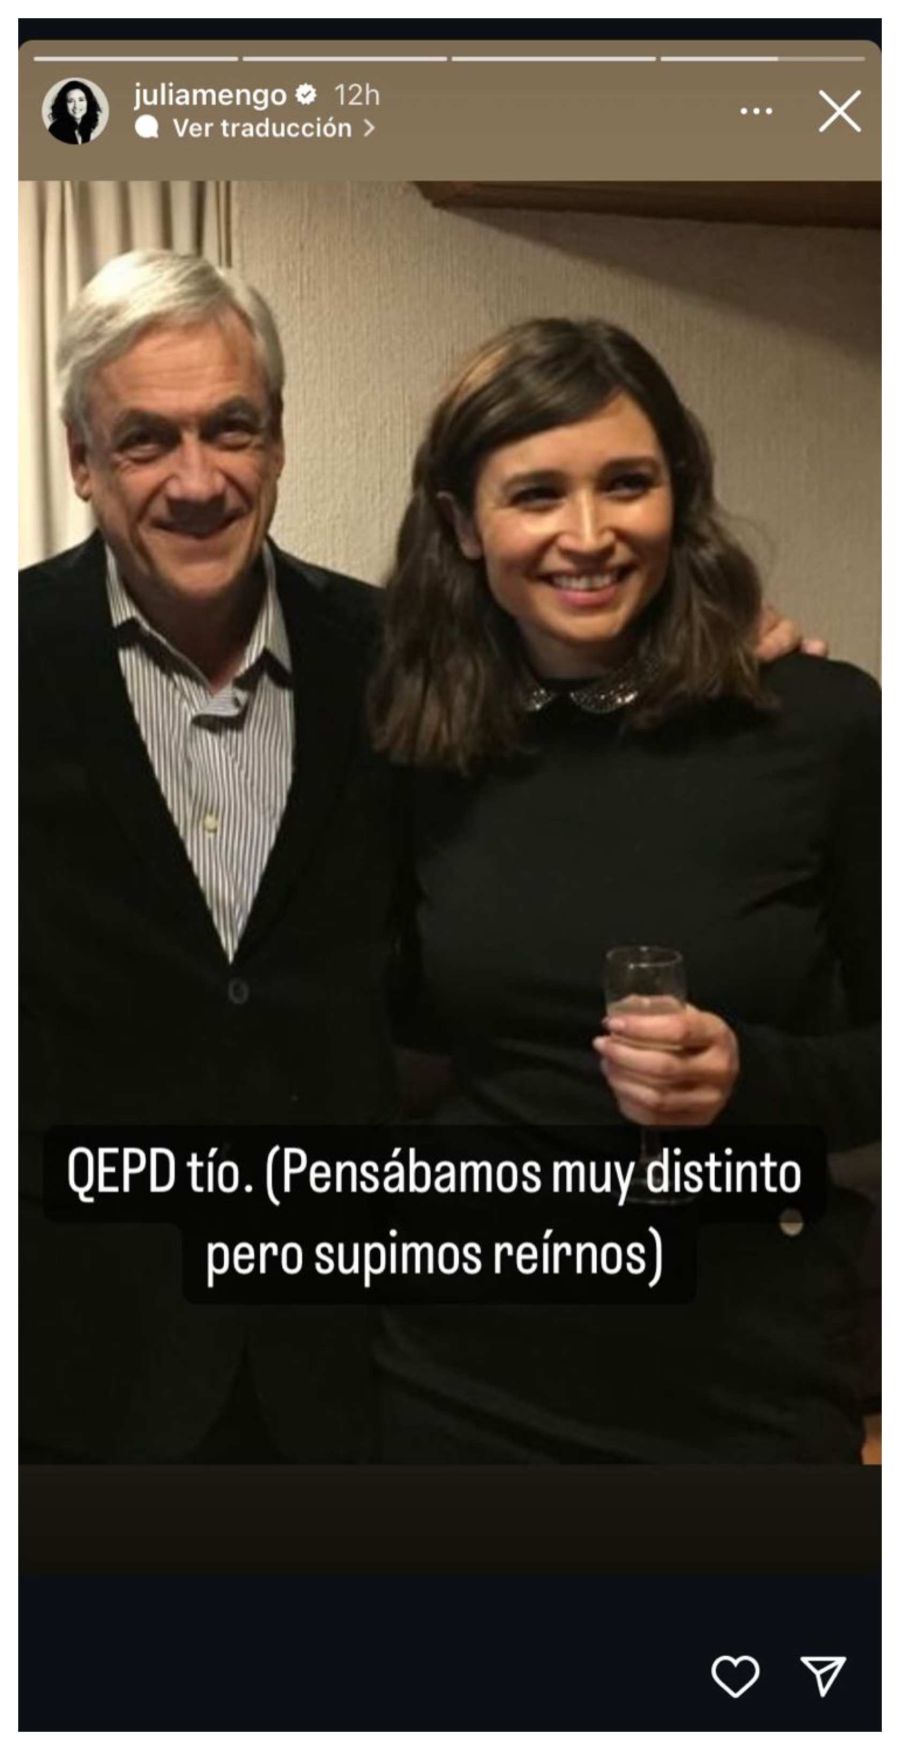 Julia Mengolini y Sebastián Piñera eran familiares lejanos.